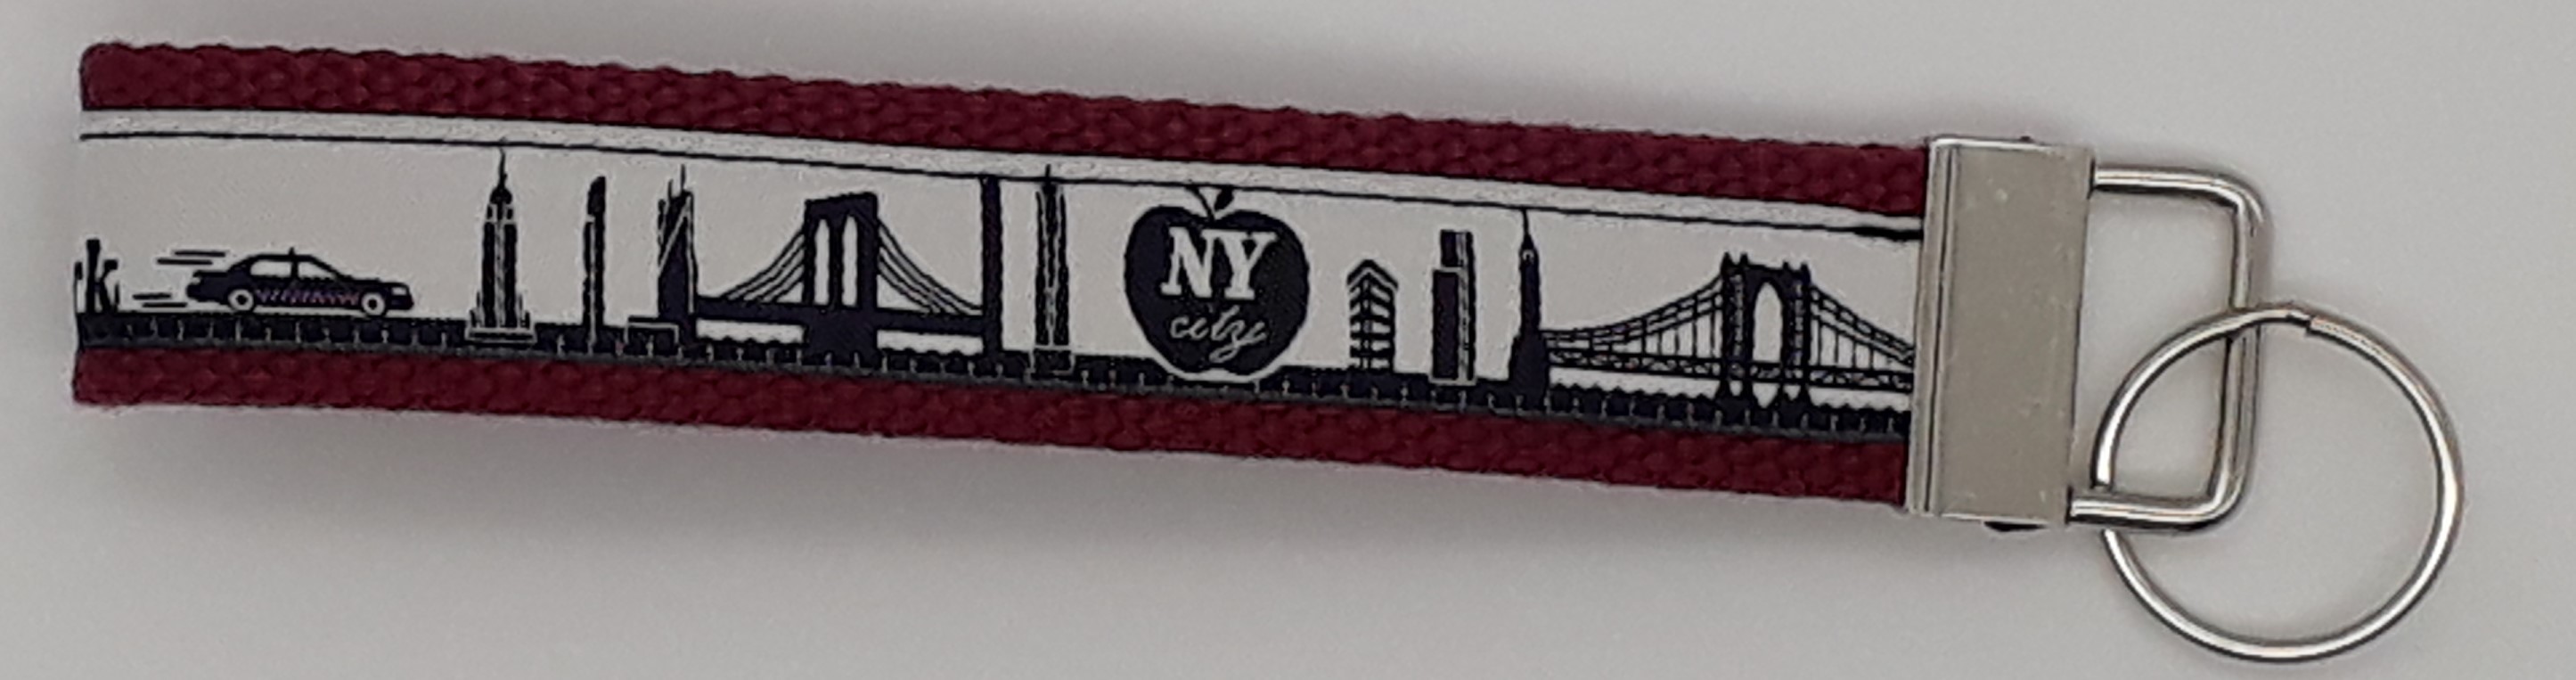 Schlüsselband "New York"